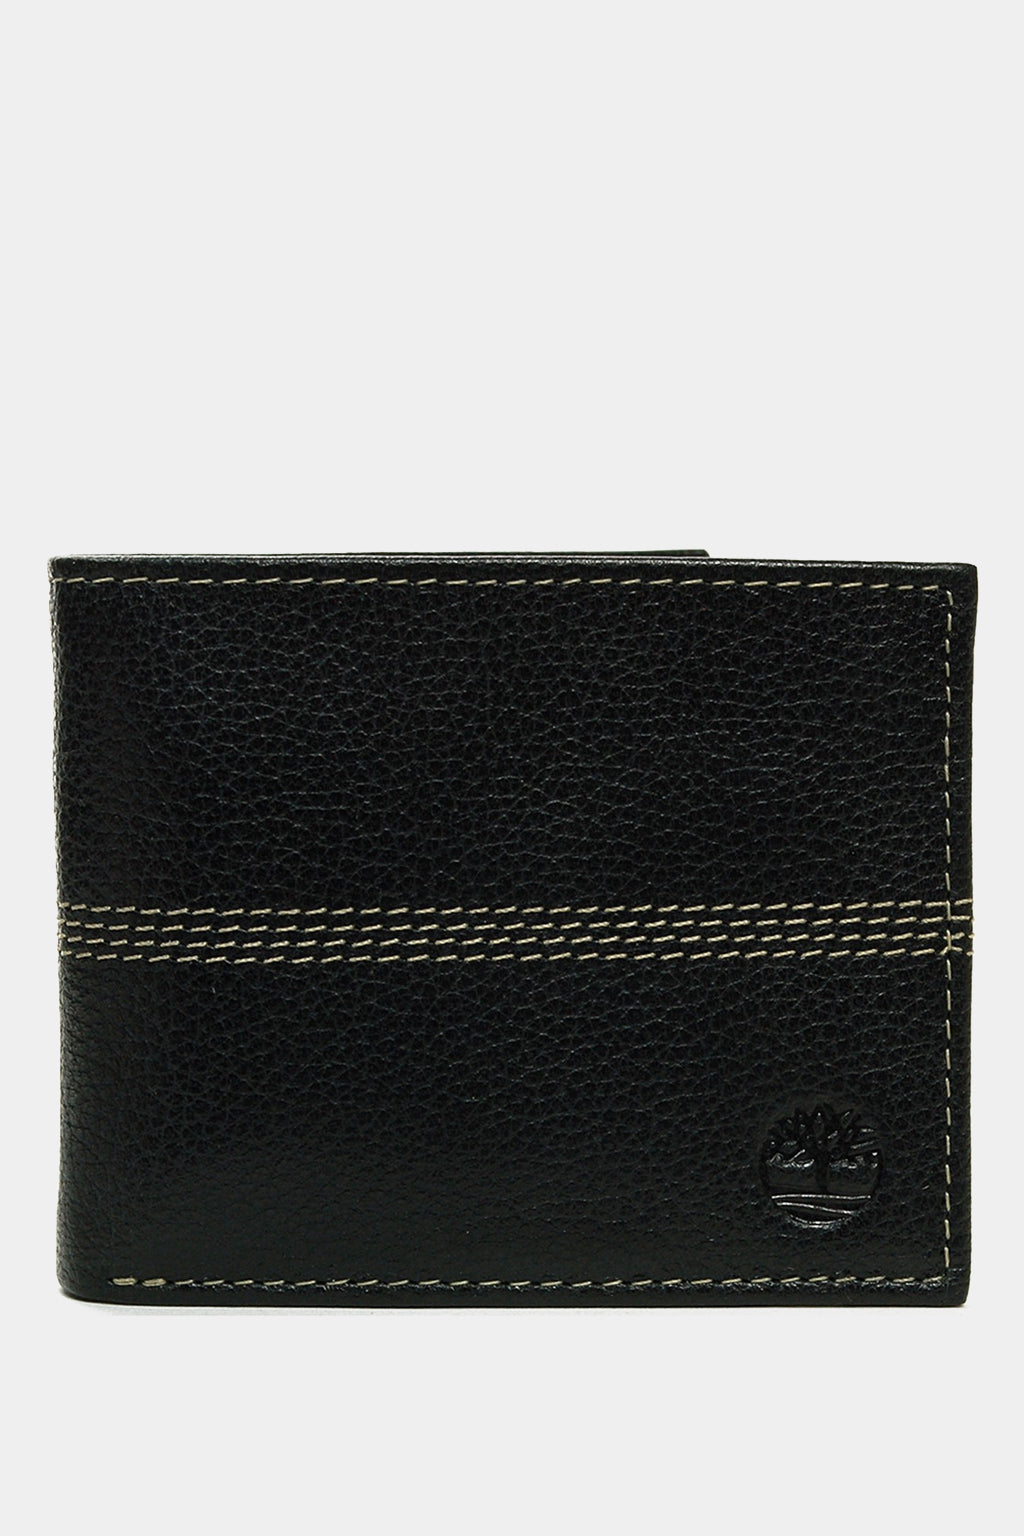 Timberland - Men's Wallet Genuine Leather Pebble Grain Stitch Detail Slim Bifold